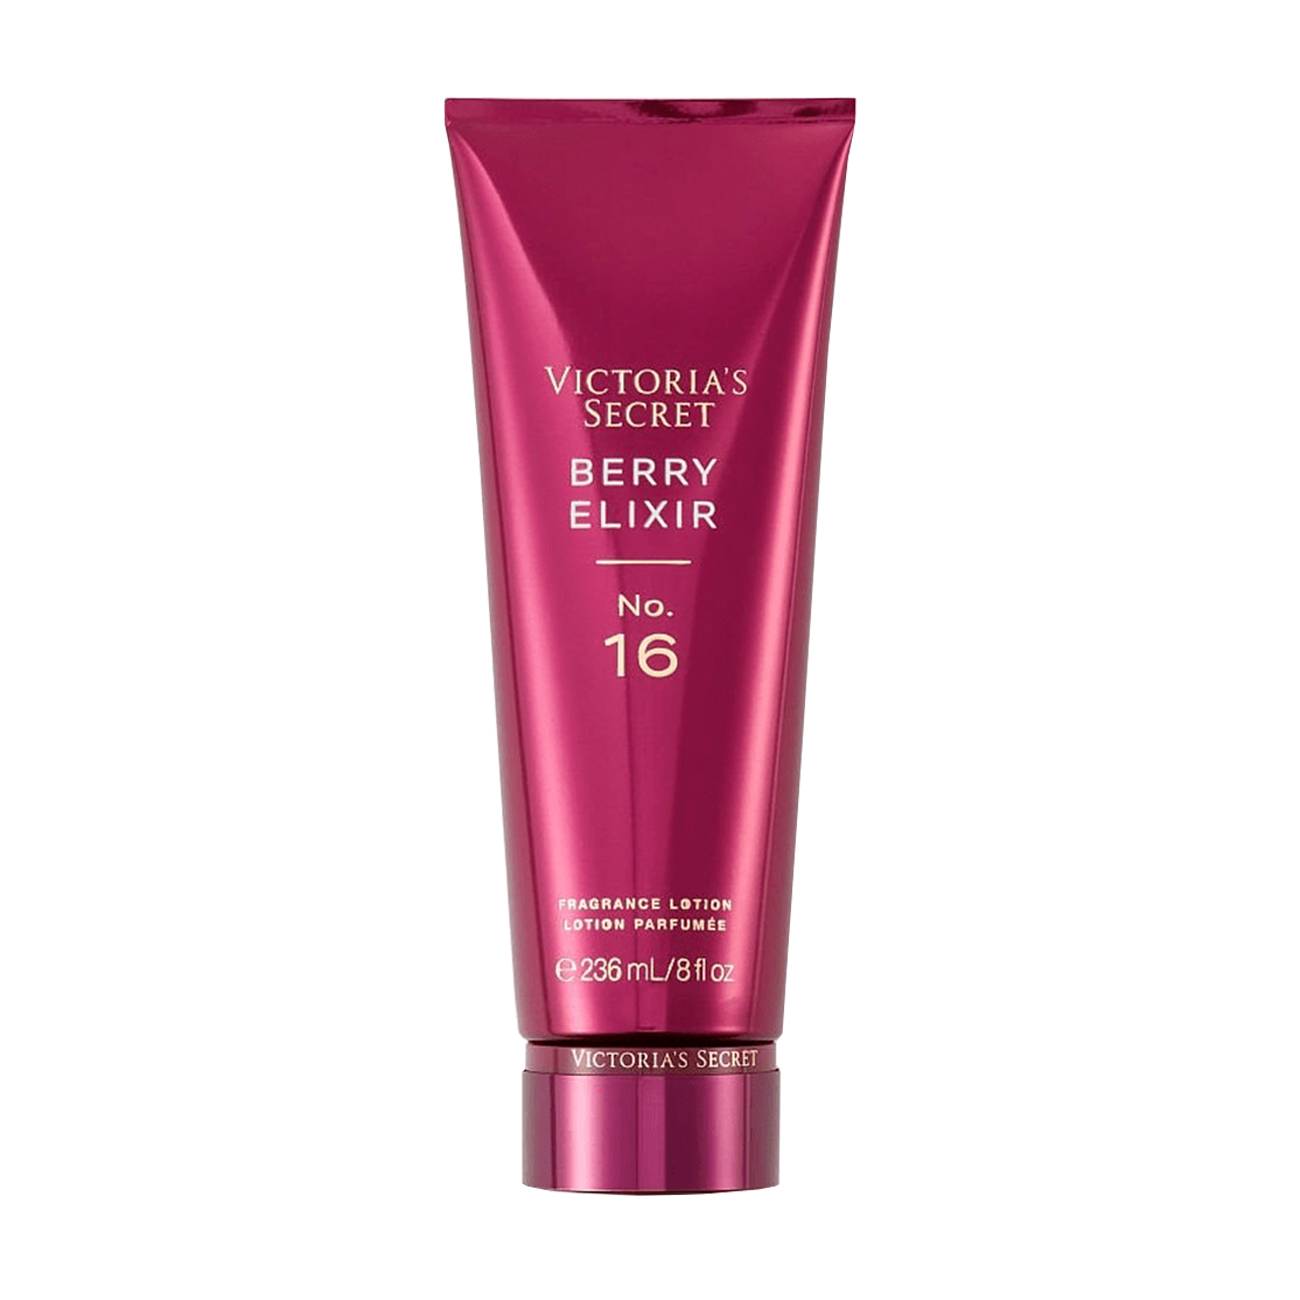 Berry Elixir No.16 Body Lotion 236 ml Victoria’s Secret bestvalue.eu imagine noua